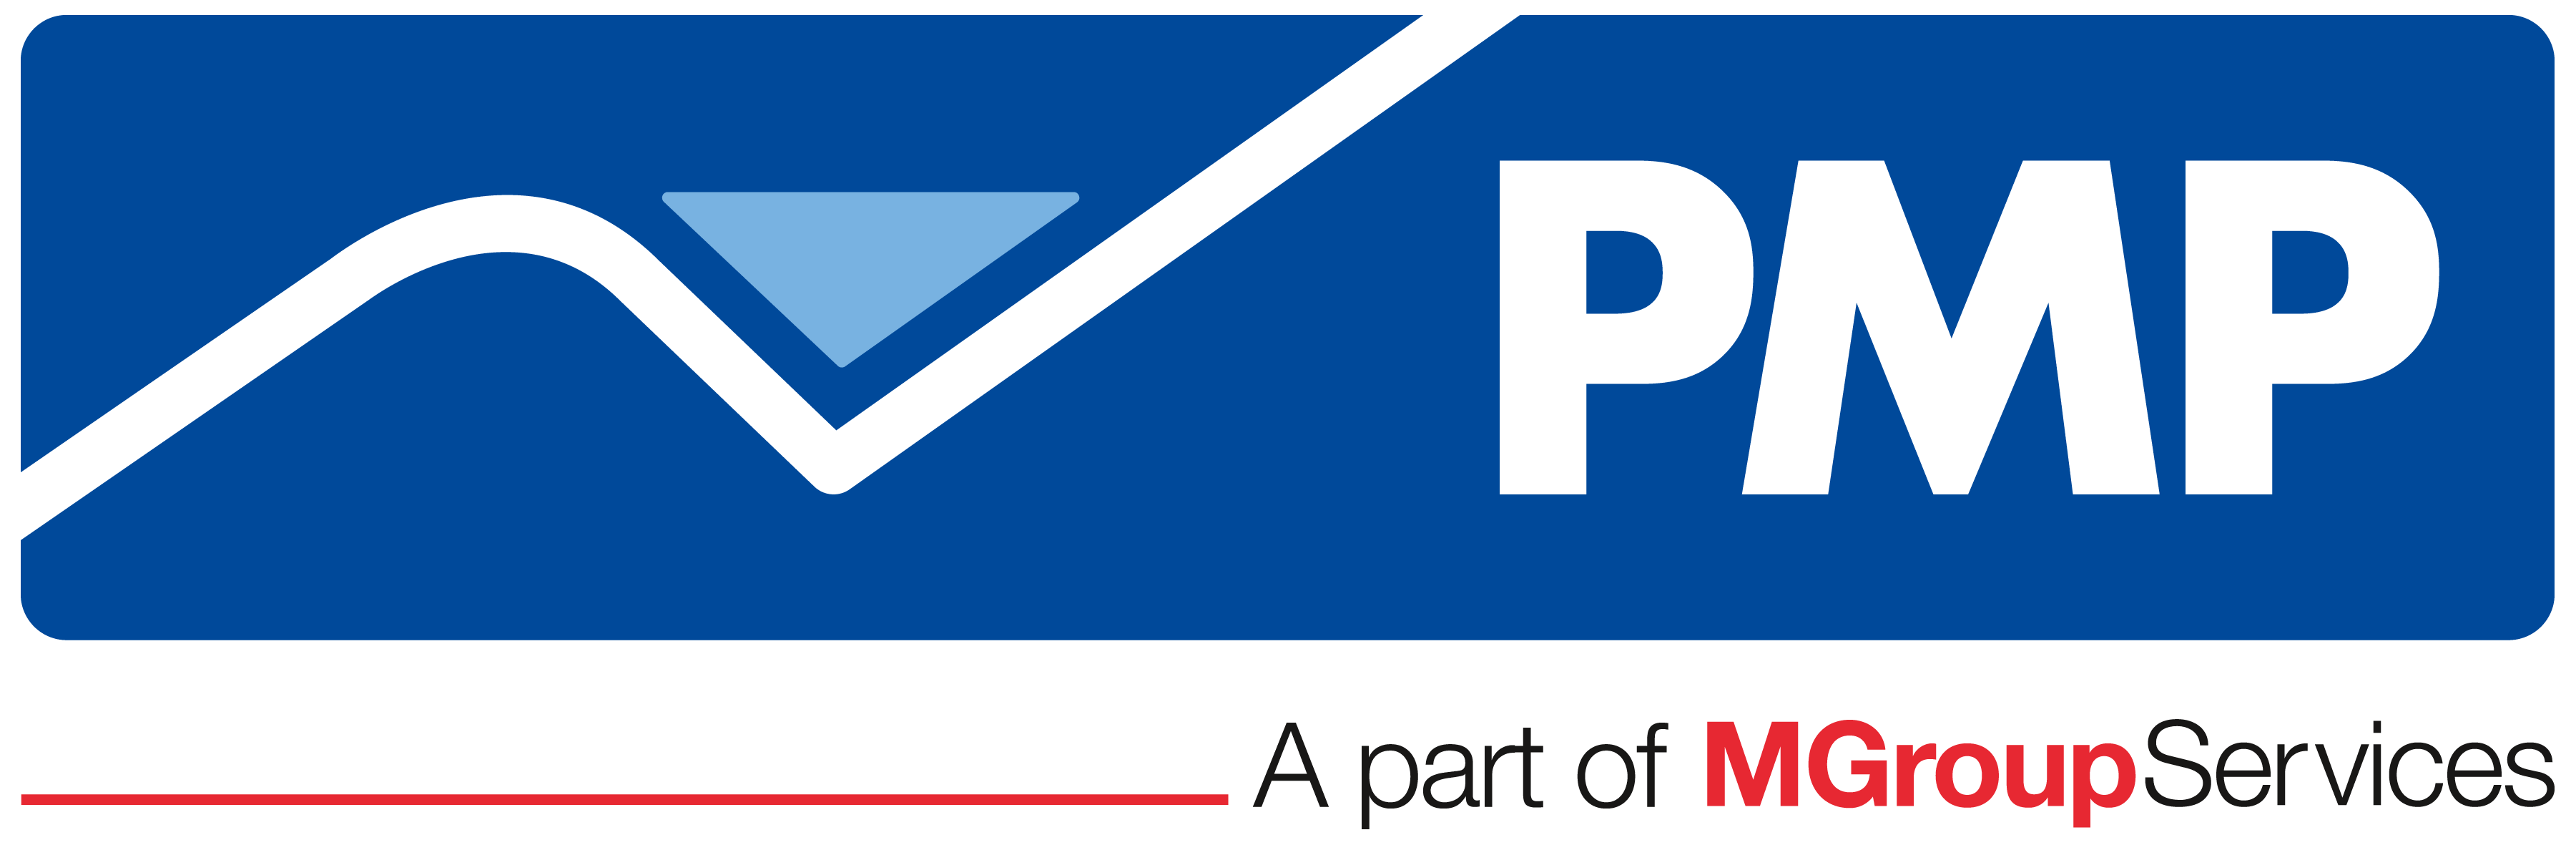 PMP Logo - M Group Services | PMP Utilities | M Group Services